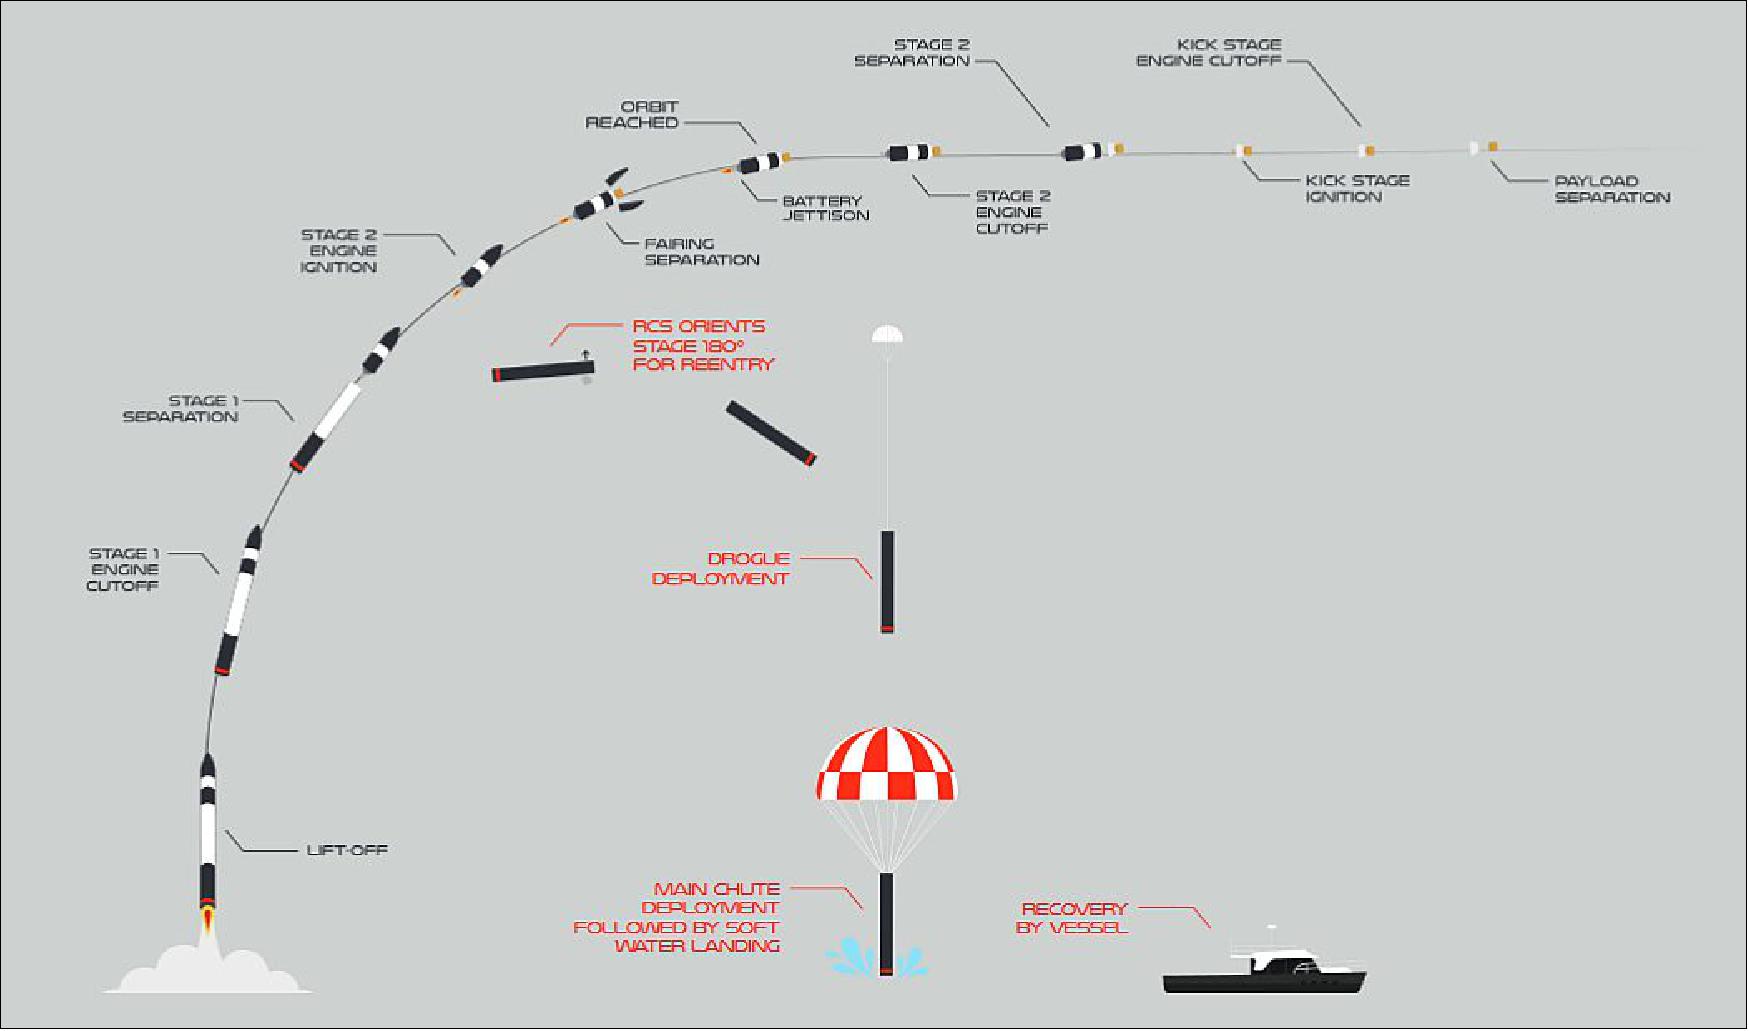 Figure 35: Timeline of launch events (image credit: Rocket Lab)